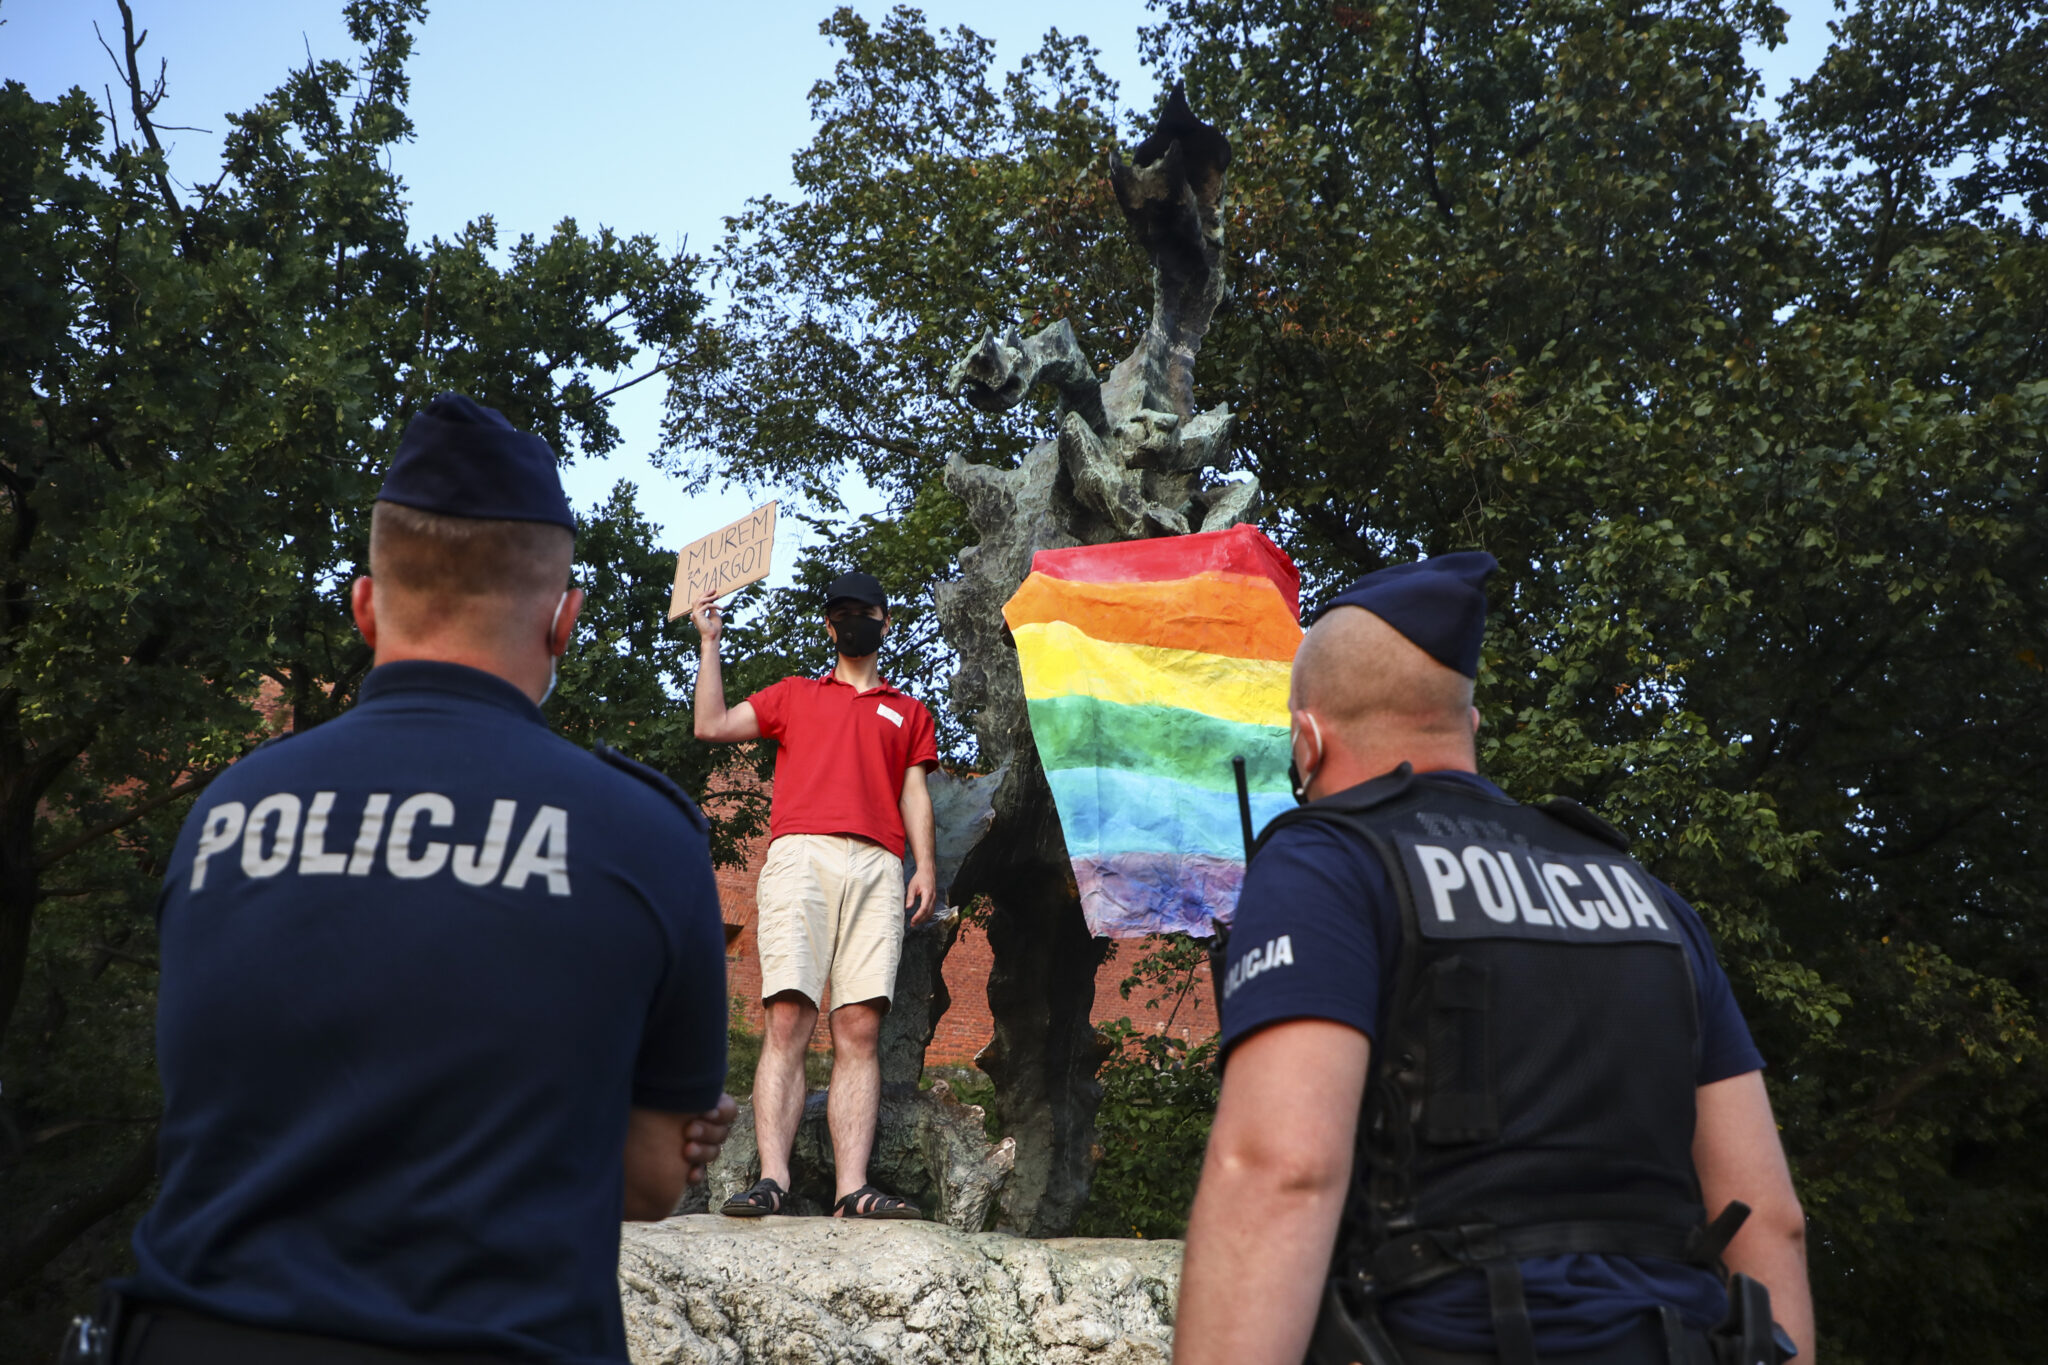 Poland Police LGBT+ protest